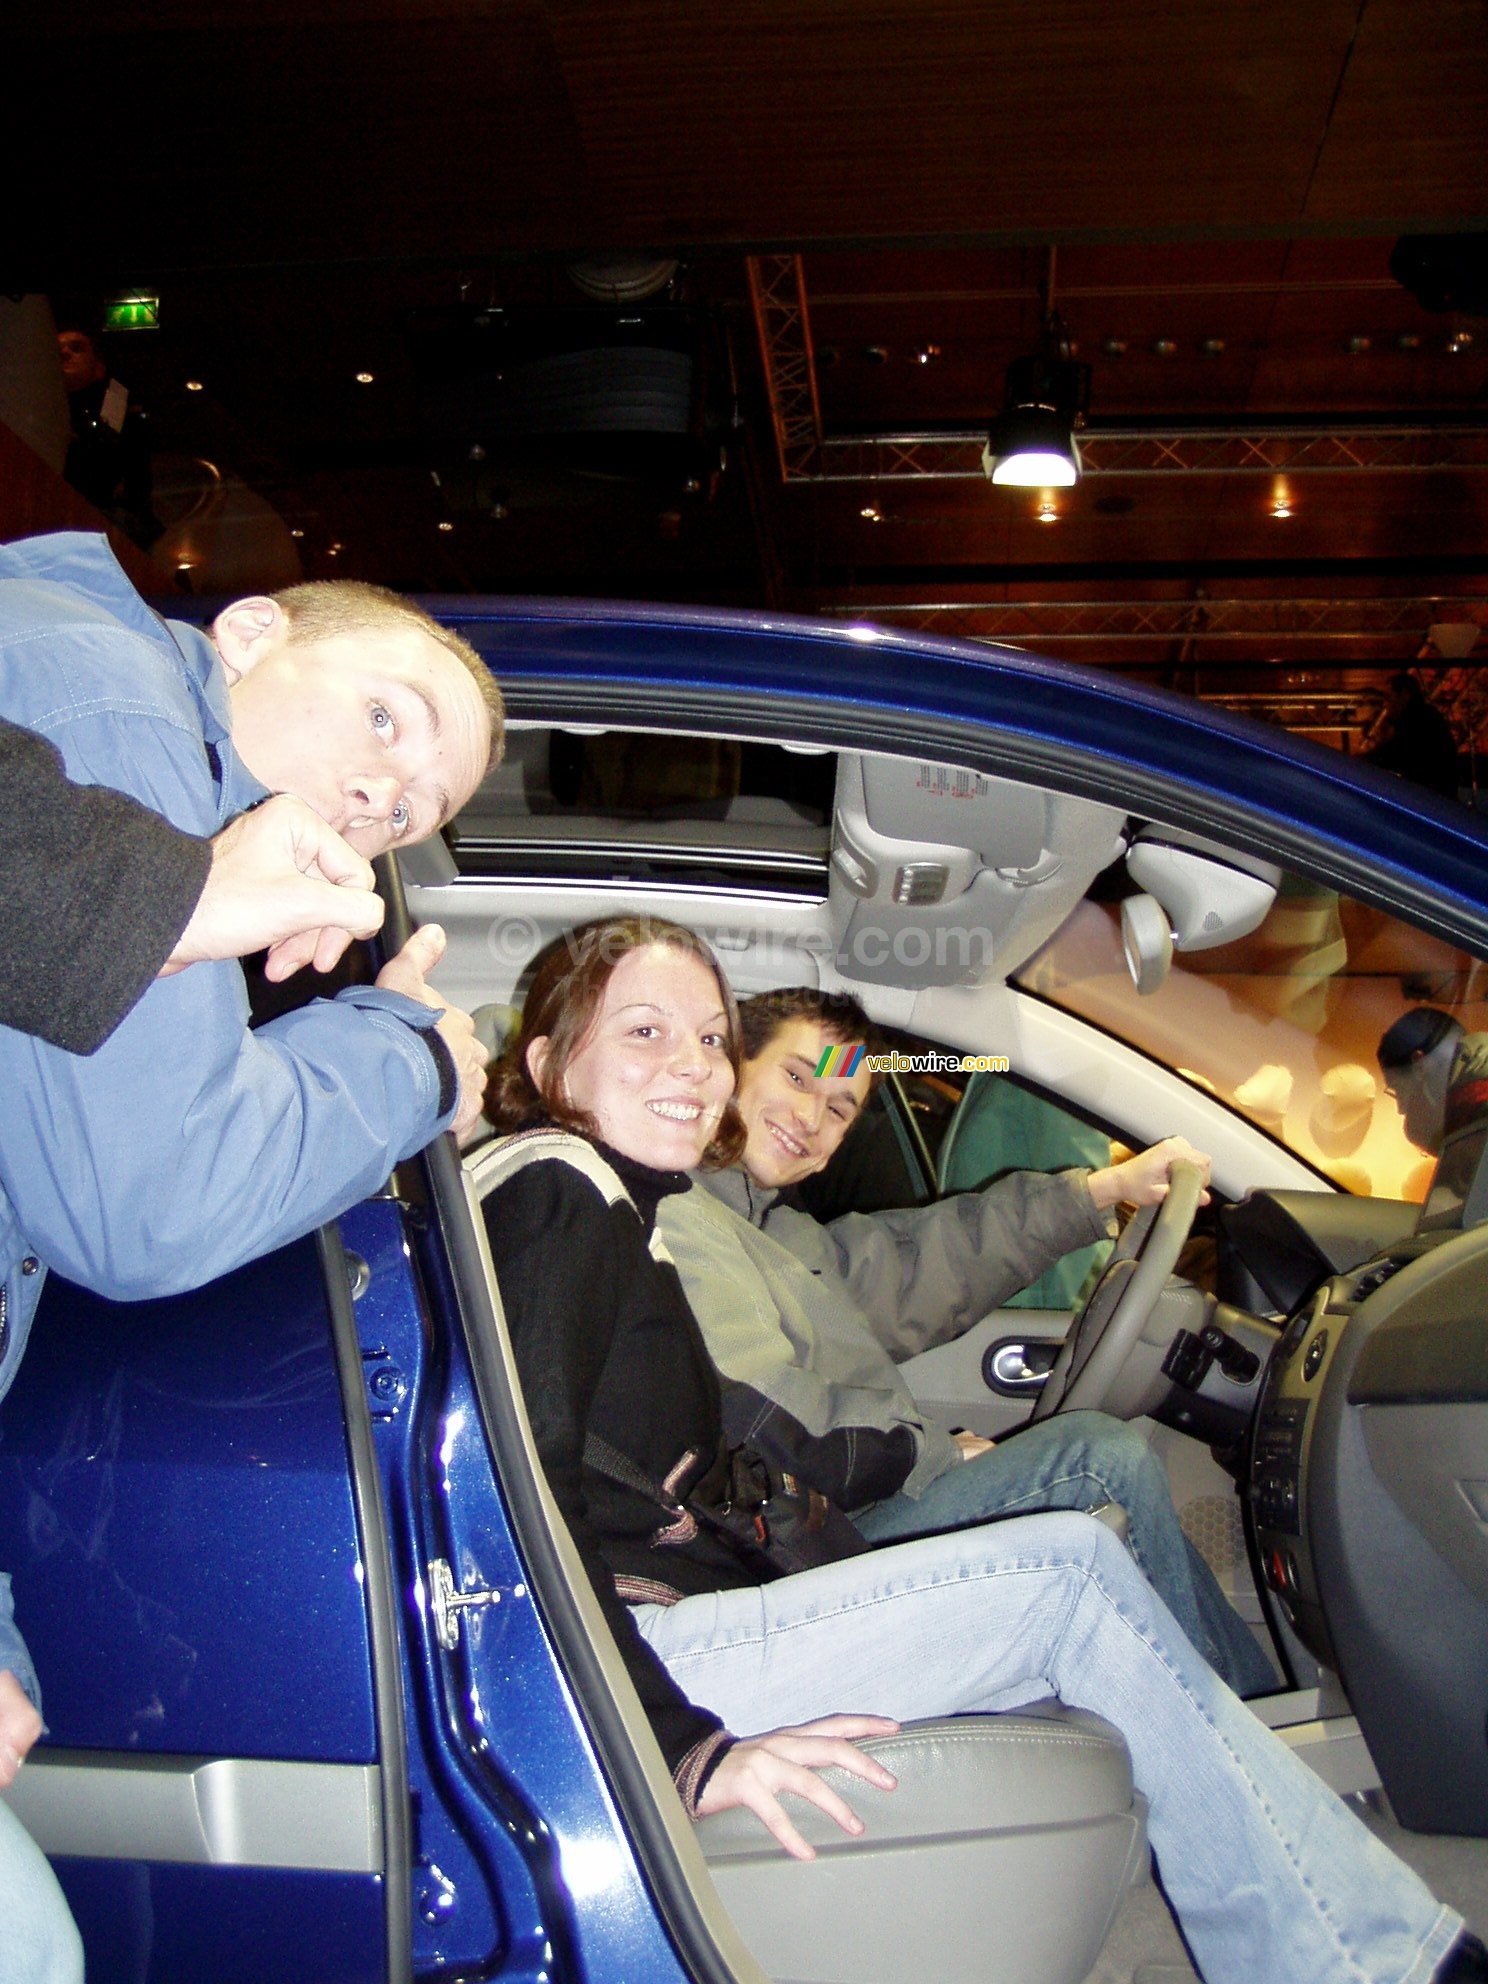 Florent, Virginie & Sbastien in a car in the Renault shownroom